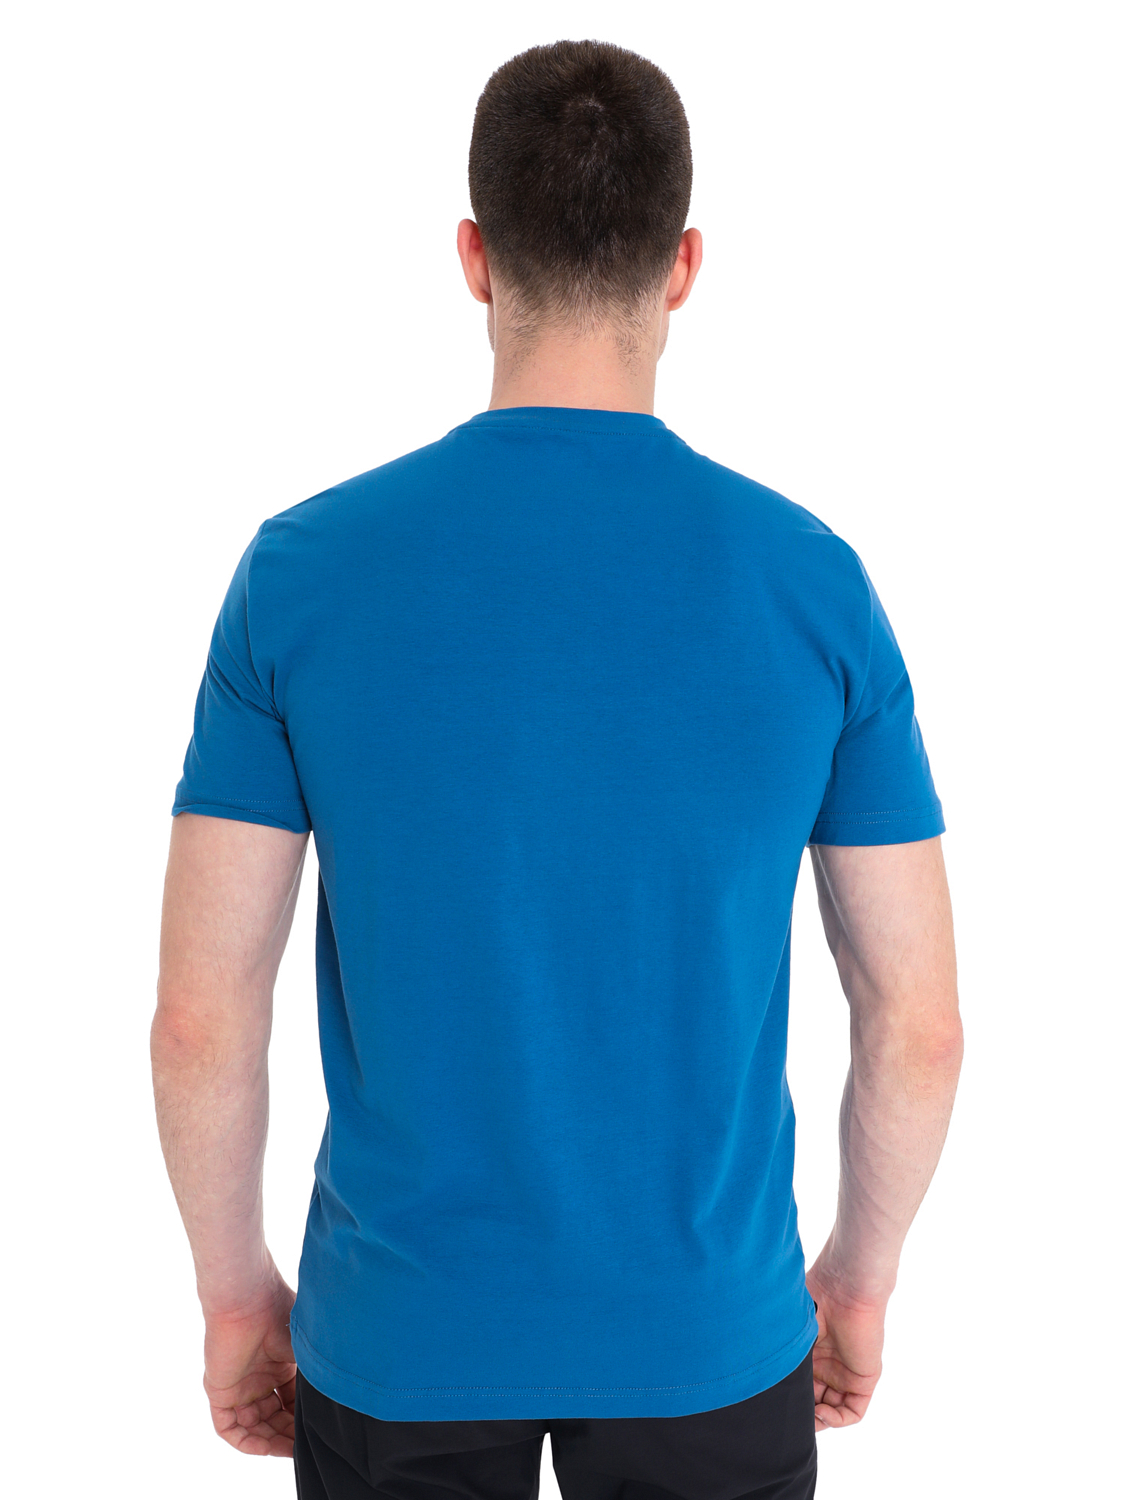 Футболка EA7 Emporio Armani T-Shirt M Dark Blue